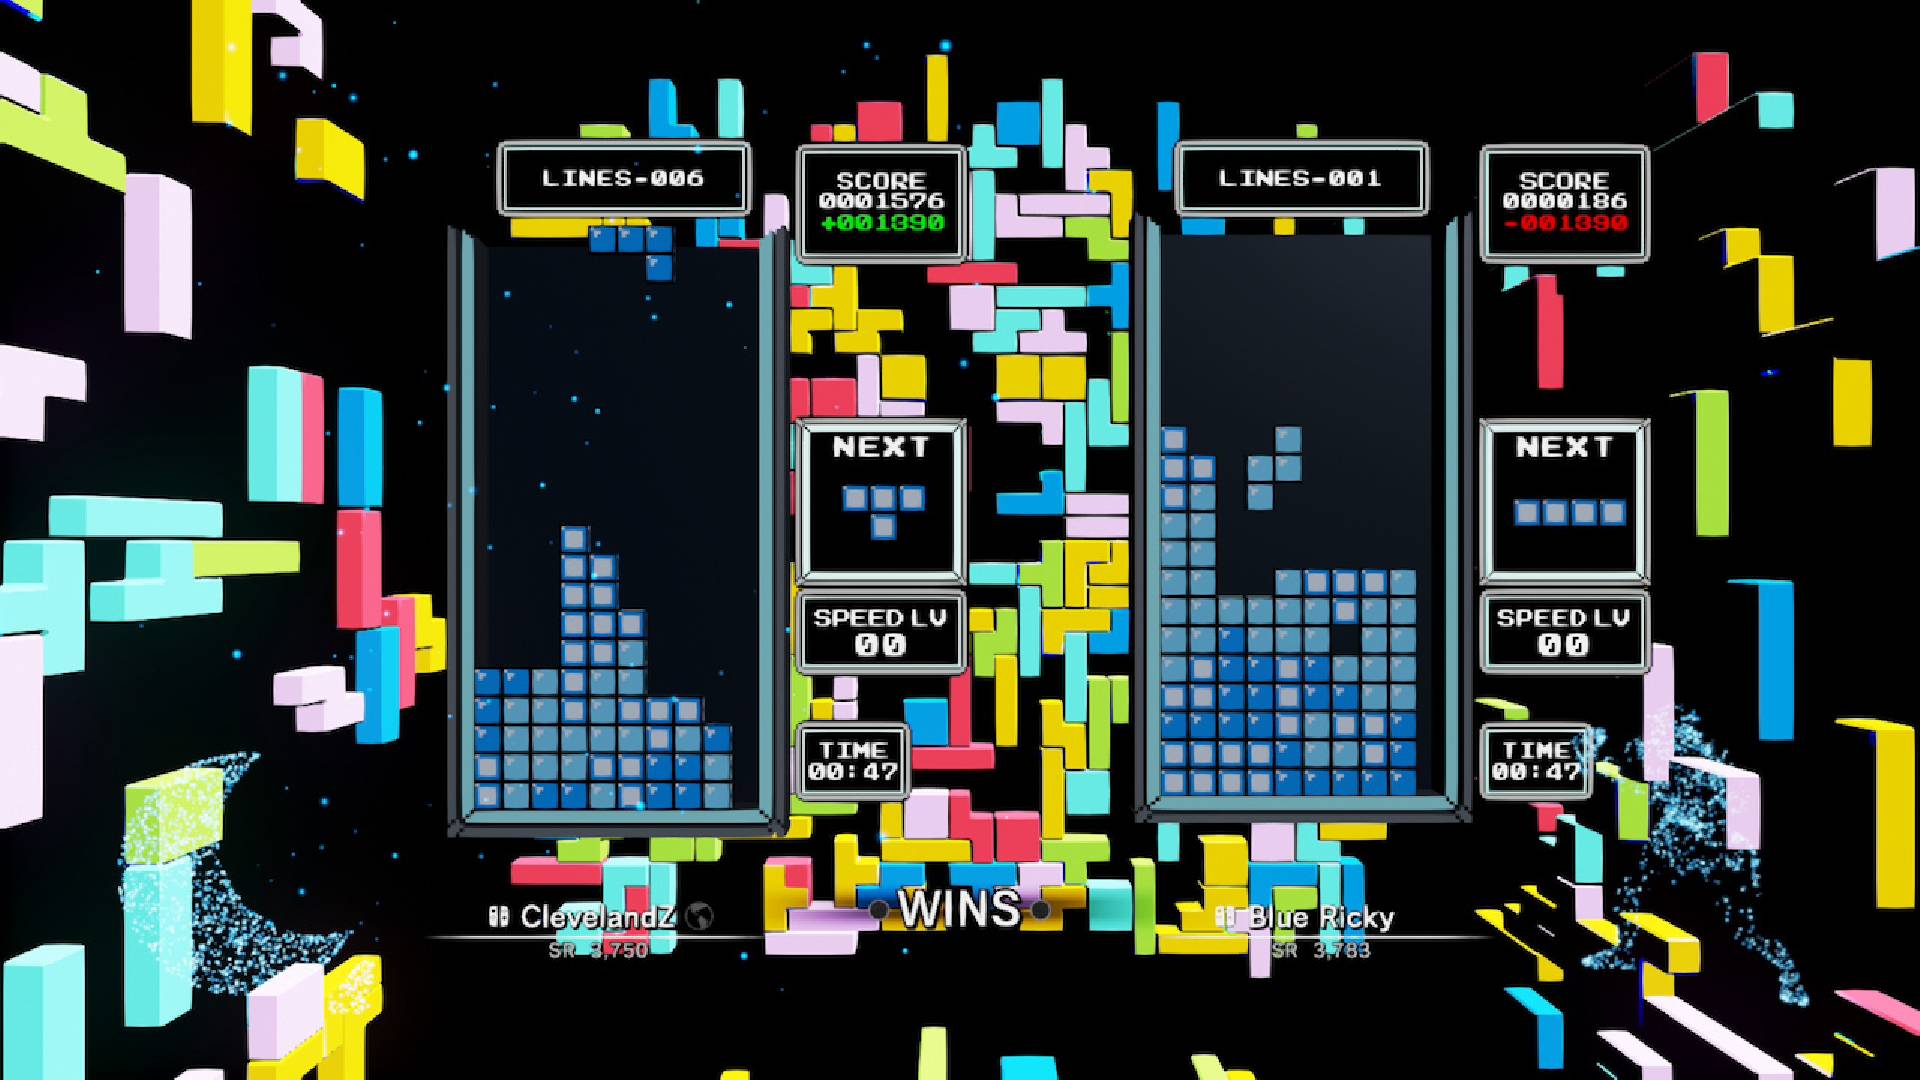 Feeling Board - The Tetris Board Game